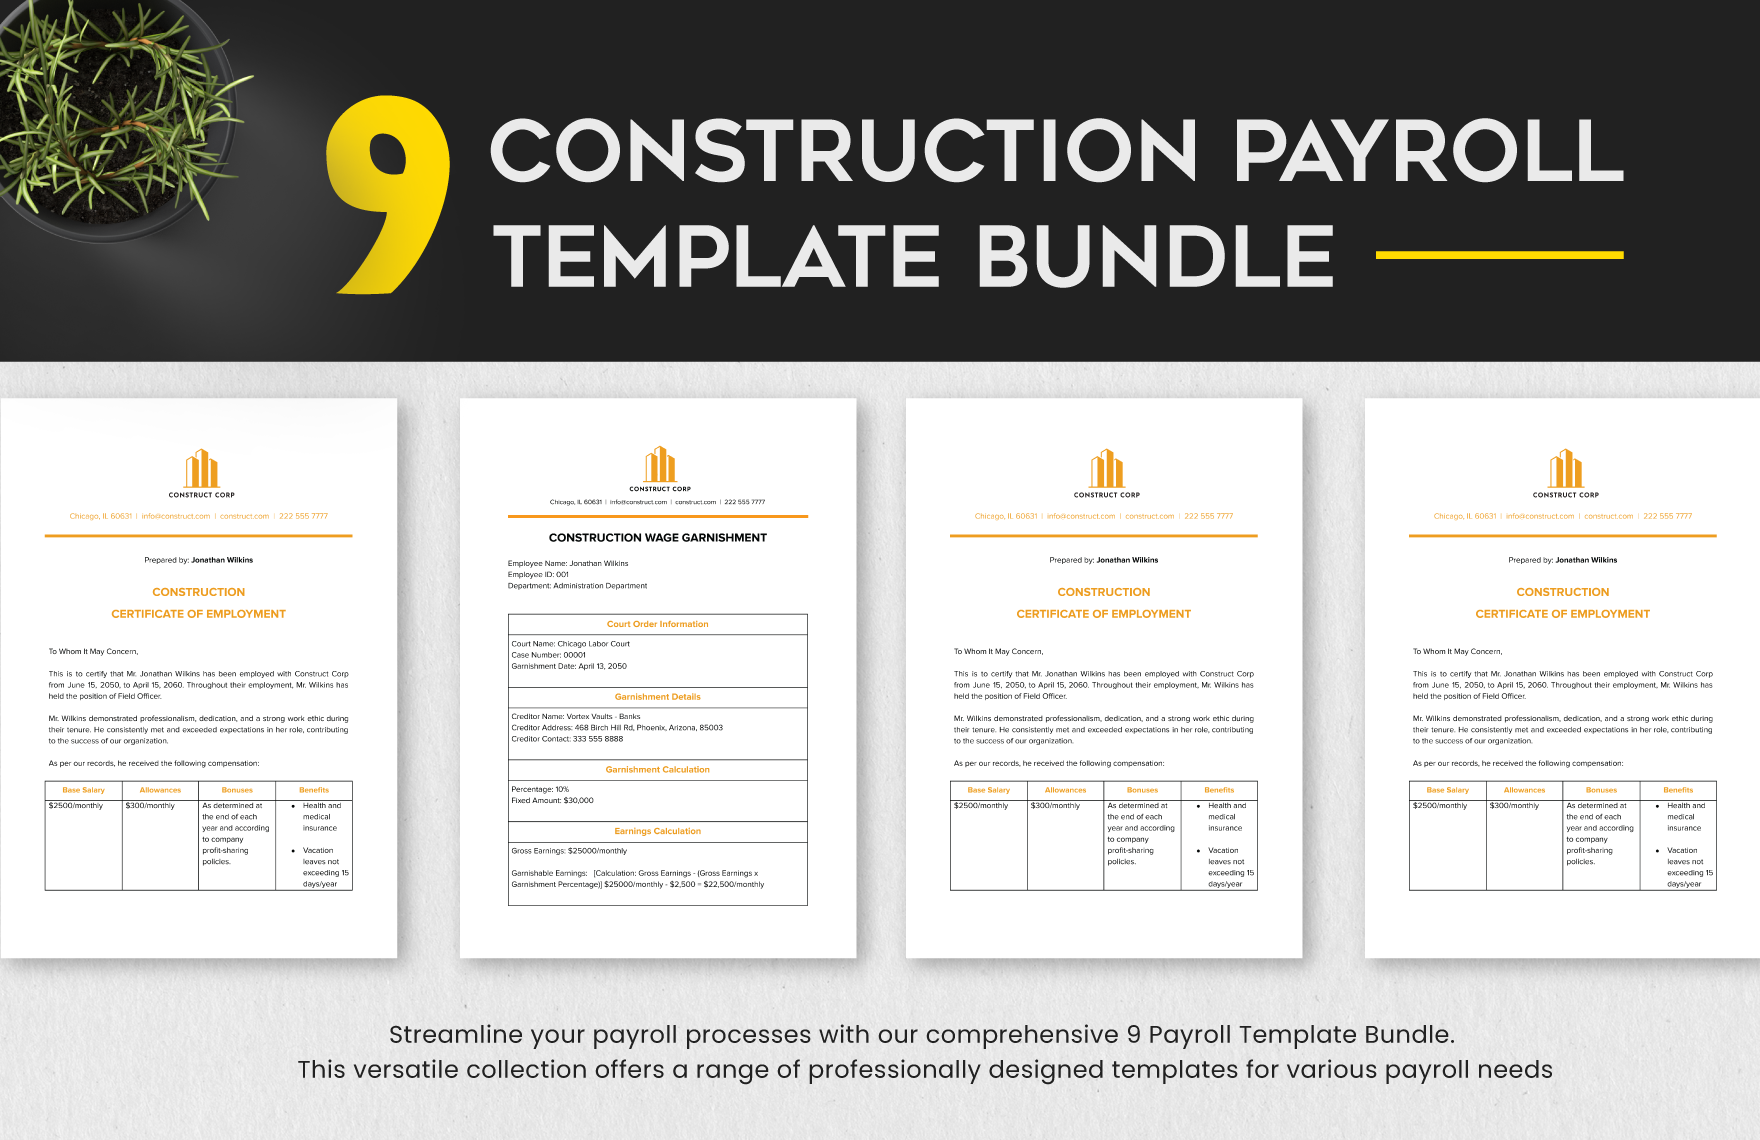 9 Construction Payroll Template Bundle